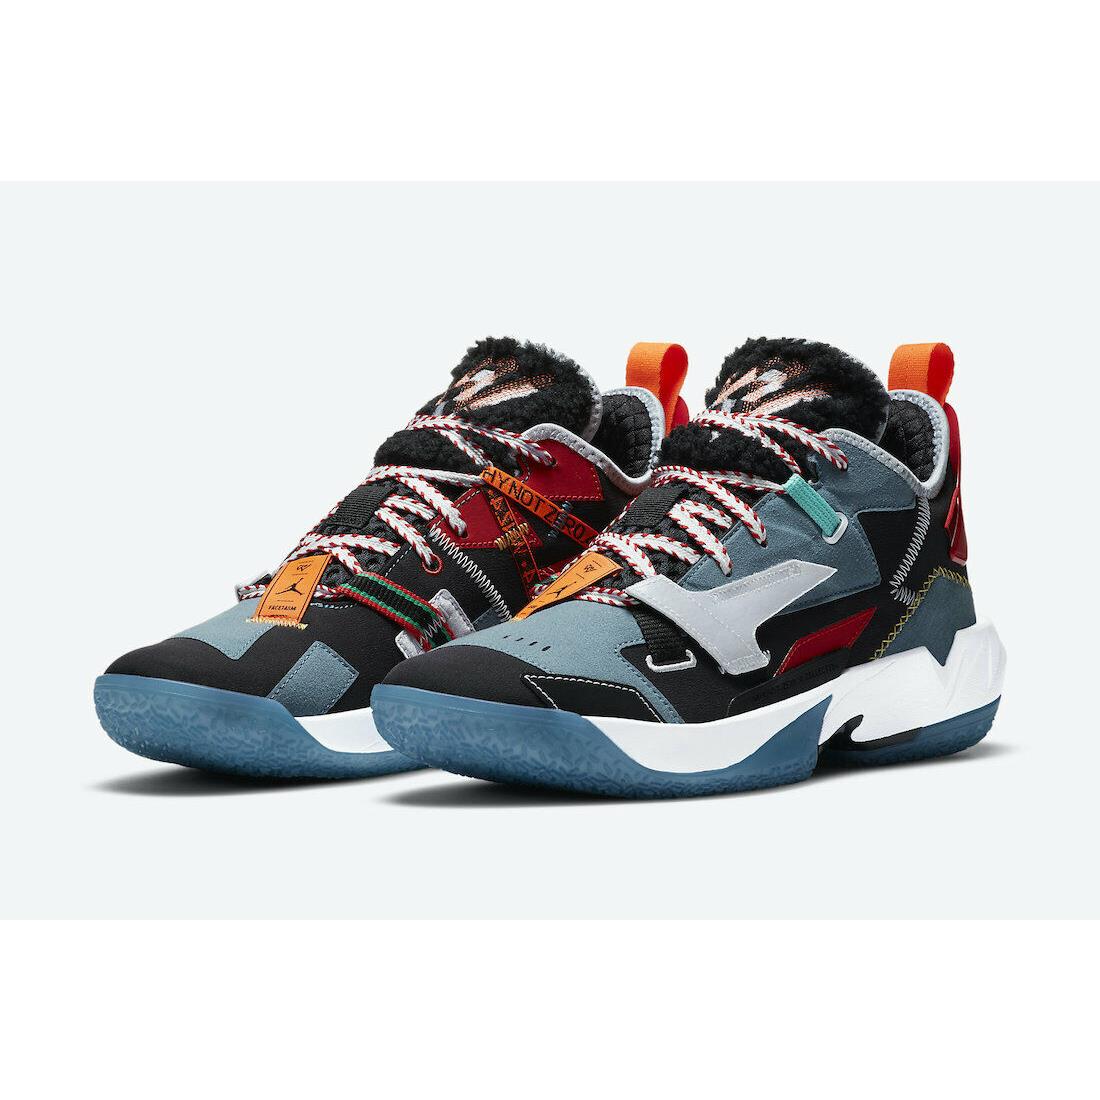 Nike Jordan Why Not Zer0.4 Premium Smokey Blue Shoes Facetasm x DC3665-001 Size 9